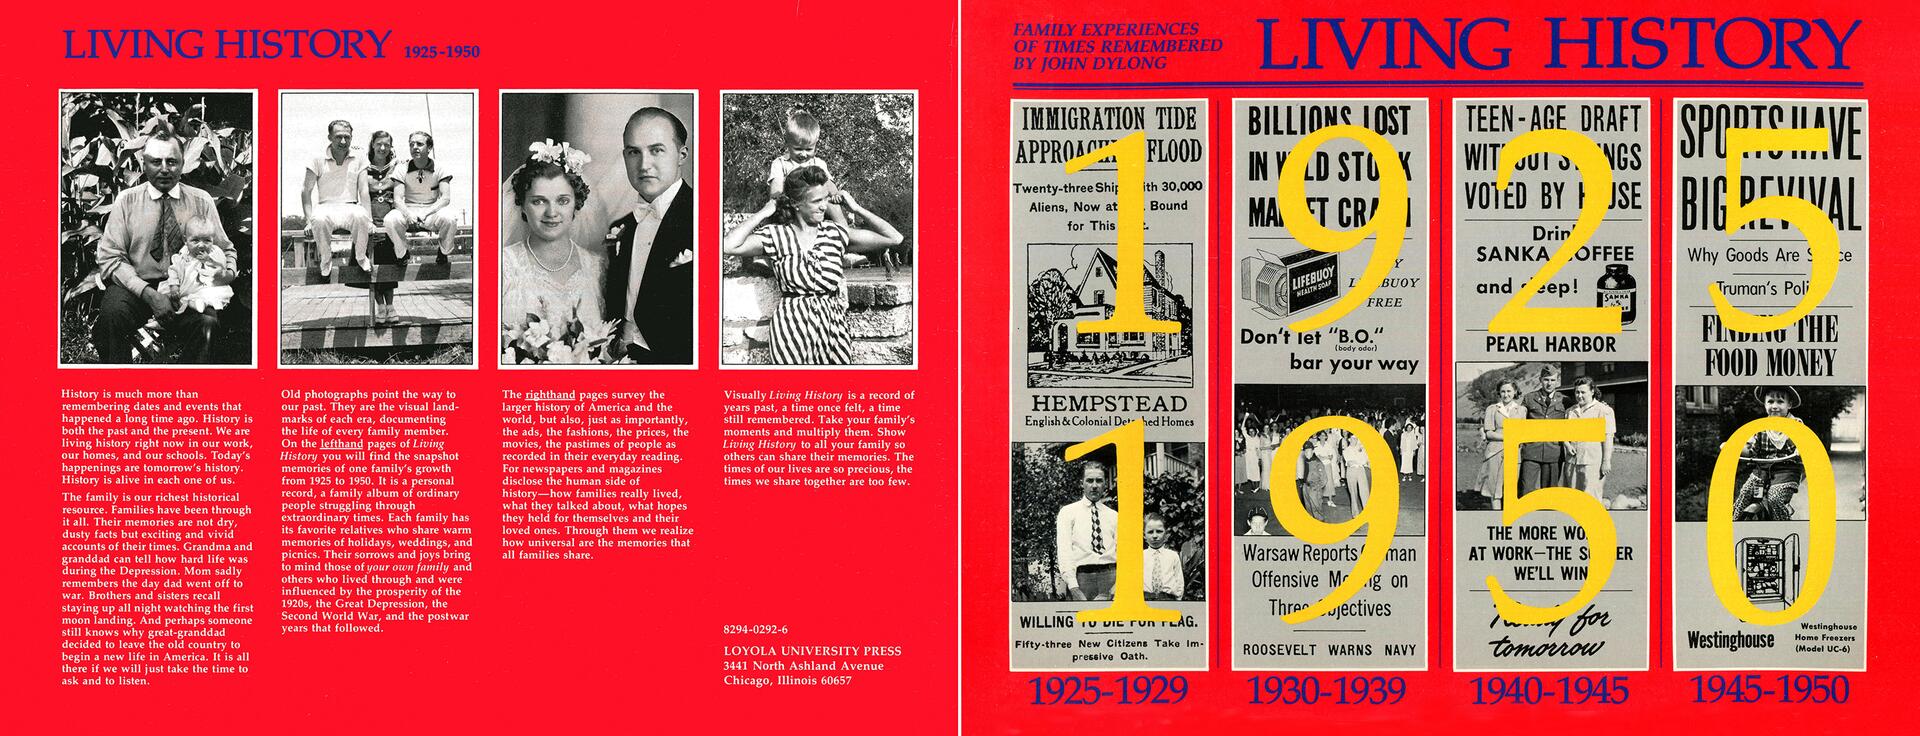 20D-03a_Living History 1925-1950 Book Cover_John Dylong